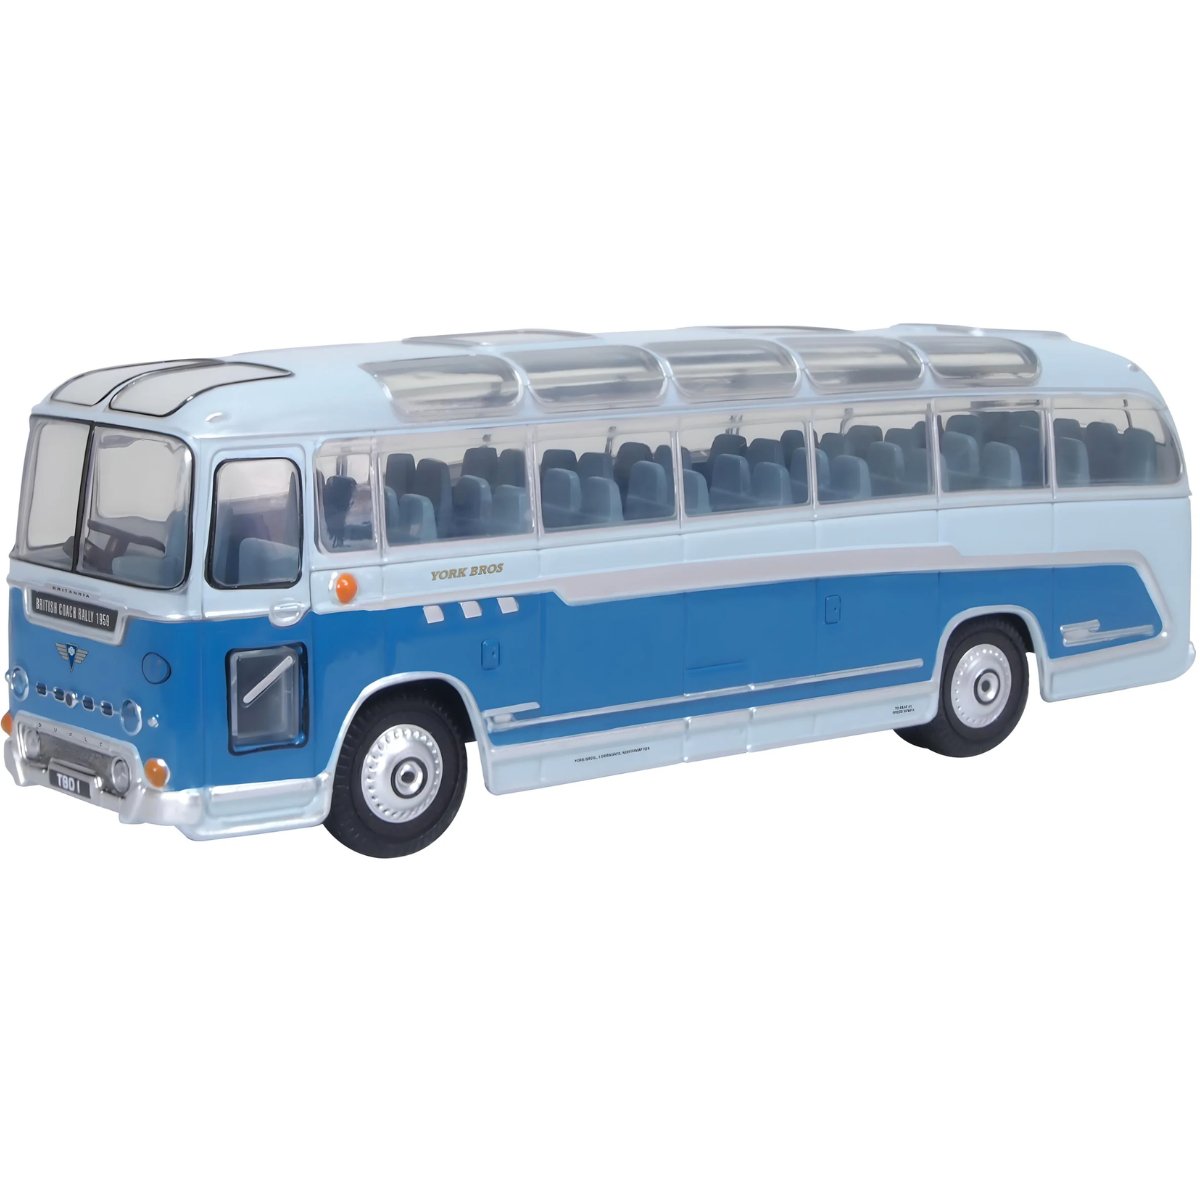 1:76 Scale Model Bus - Oxford Diecast 76DB003 Duple Britannia York Bros - Two Tone Blue